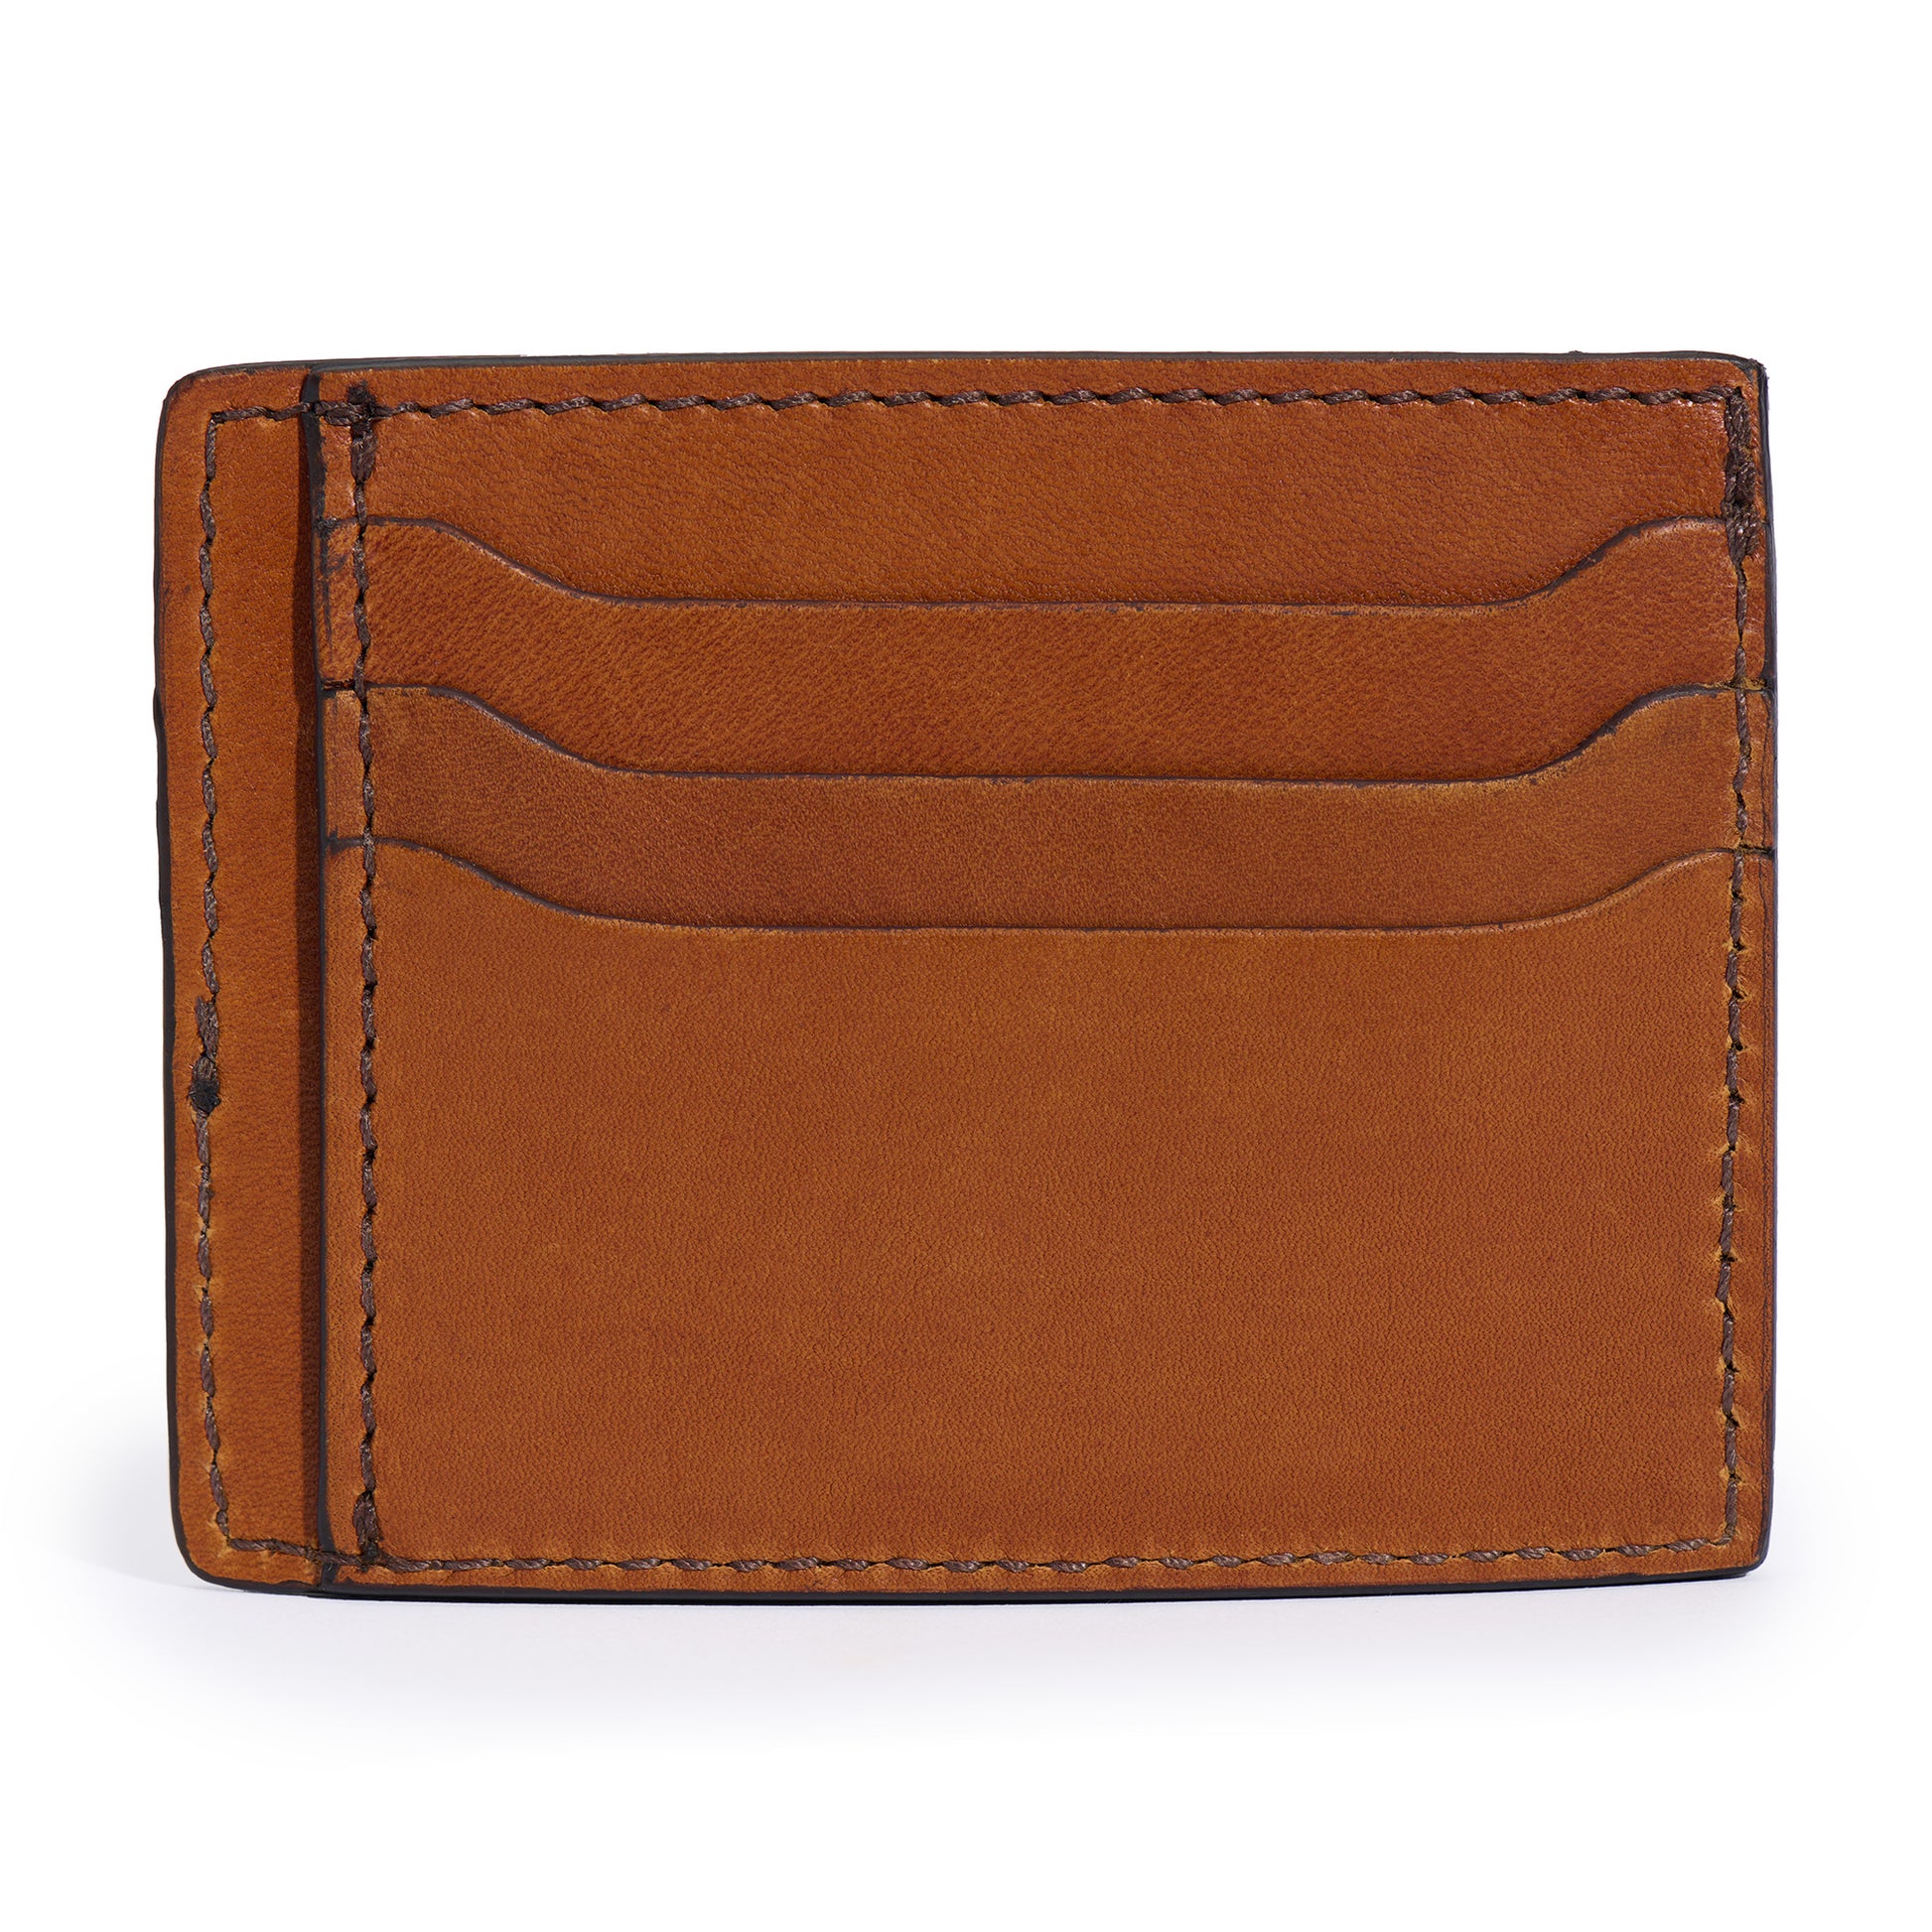 saddle tan leather slim front pocket wallet by Jackson Wayne 